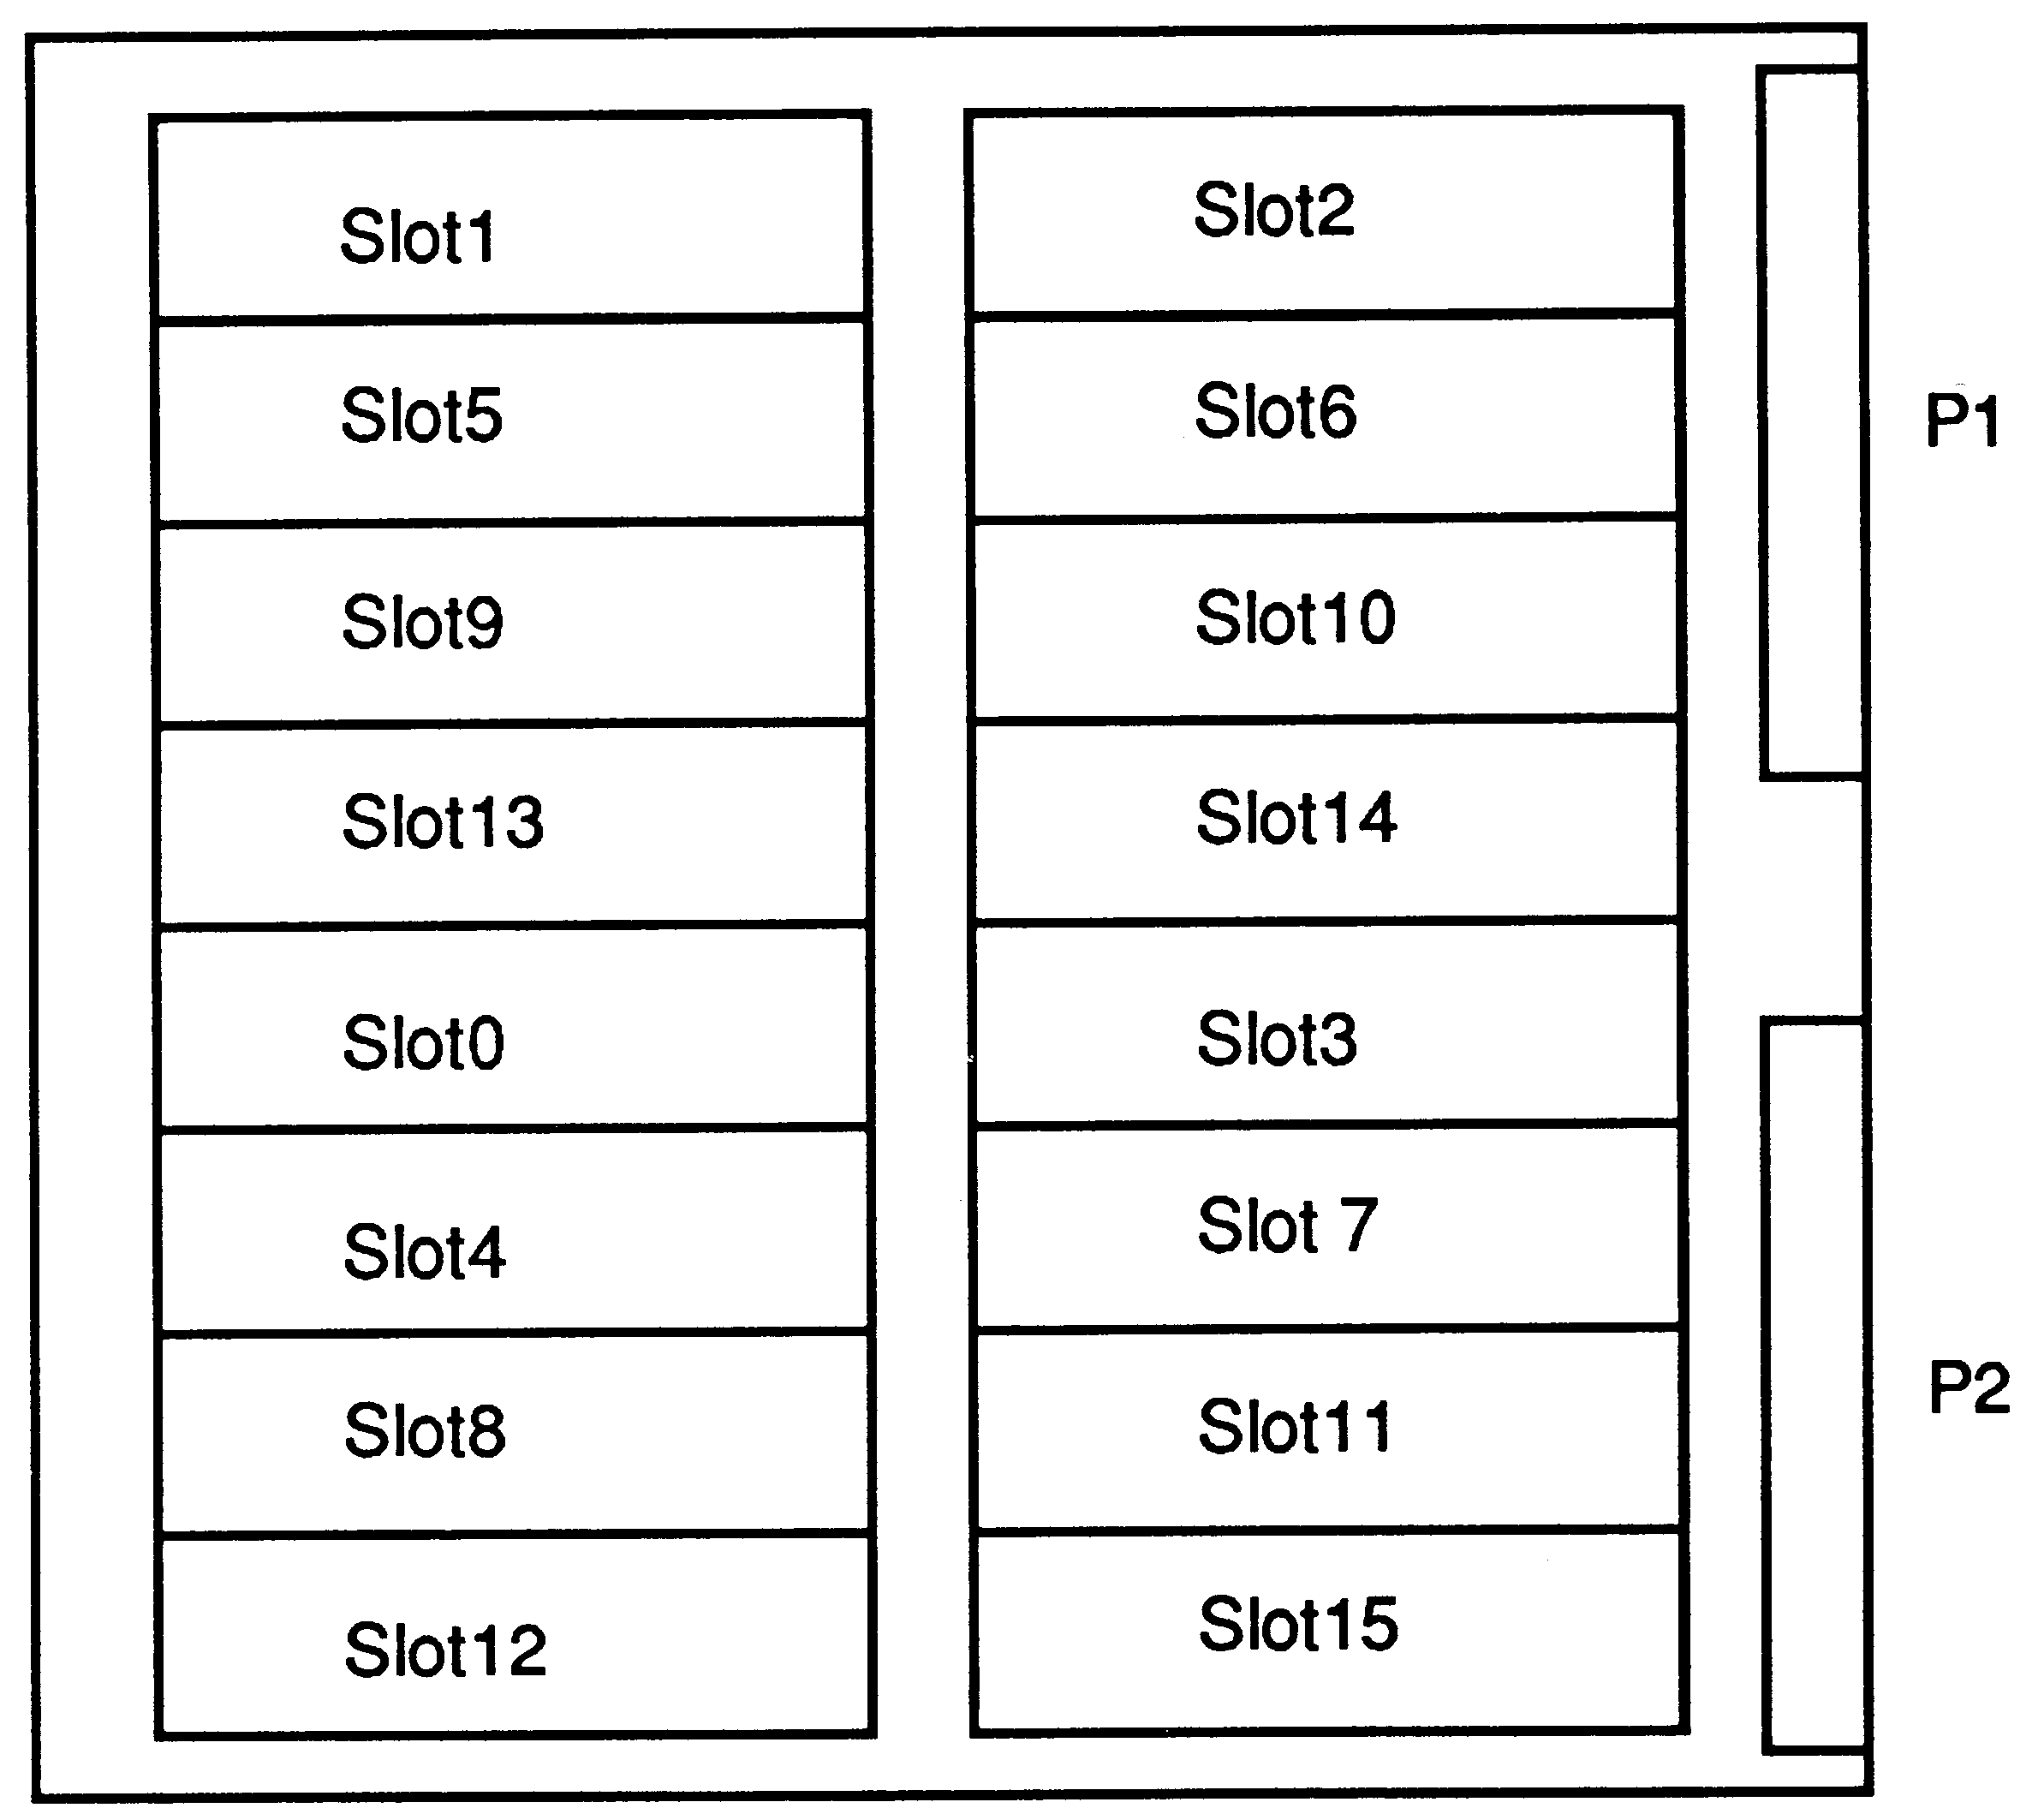 IMS B012 slot positions